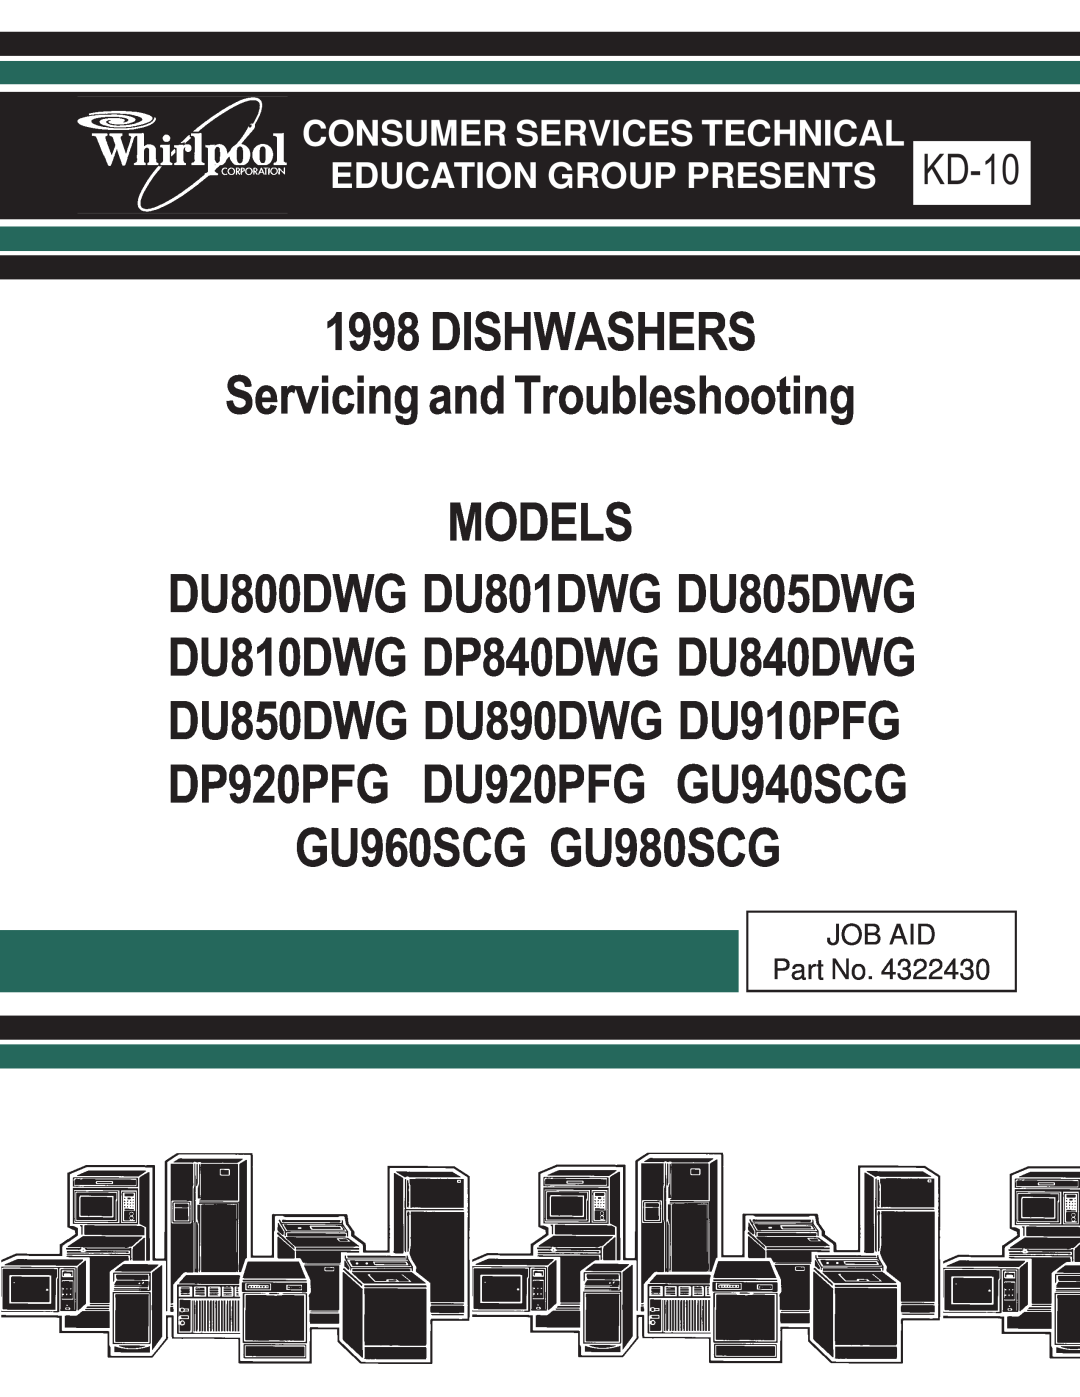 Kenmore DU890DWG, DU910PFG, DU920PFG, GU960SCG manual DISHWASHERS Servicing and Troubleshooting MODELS, KD-10, Job Aid 